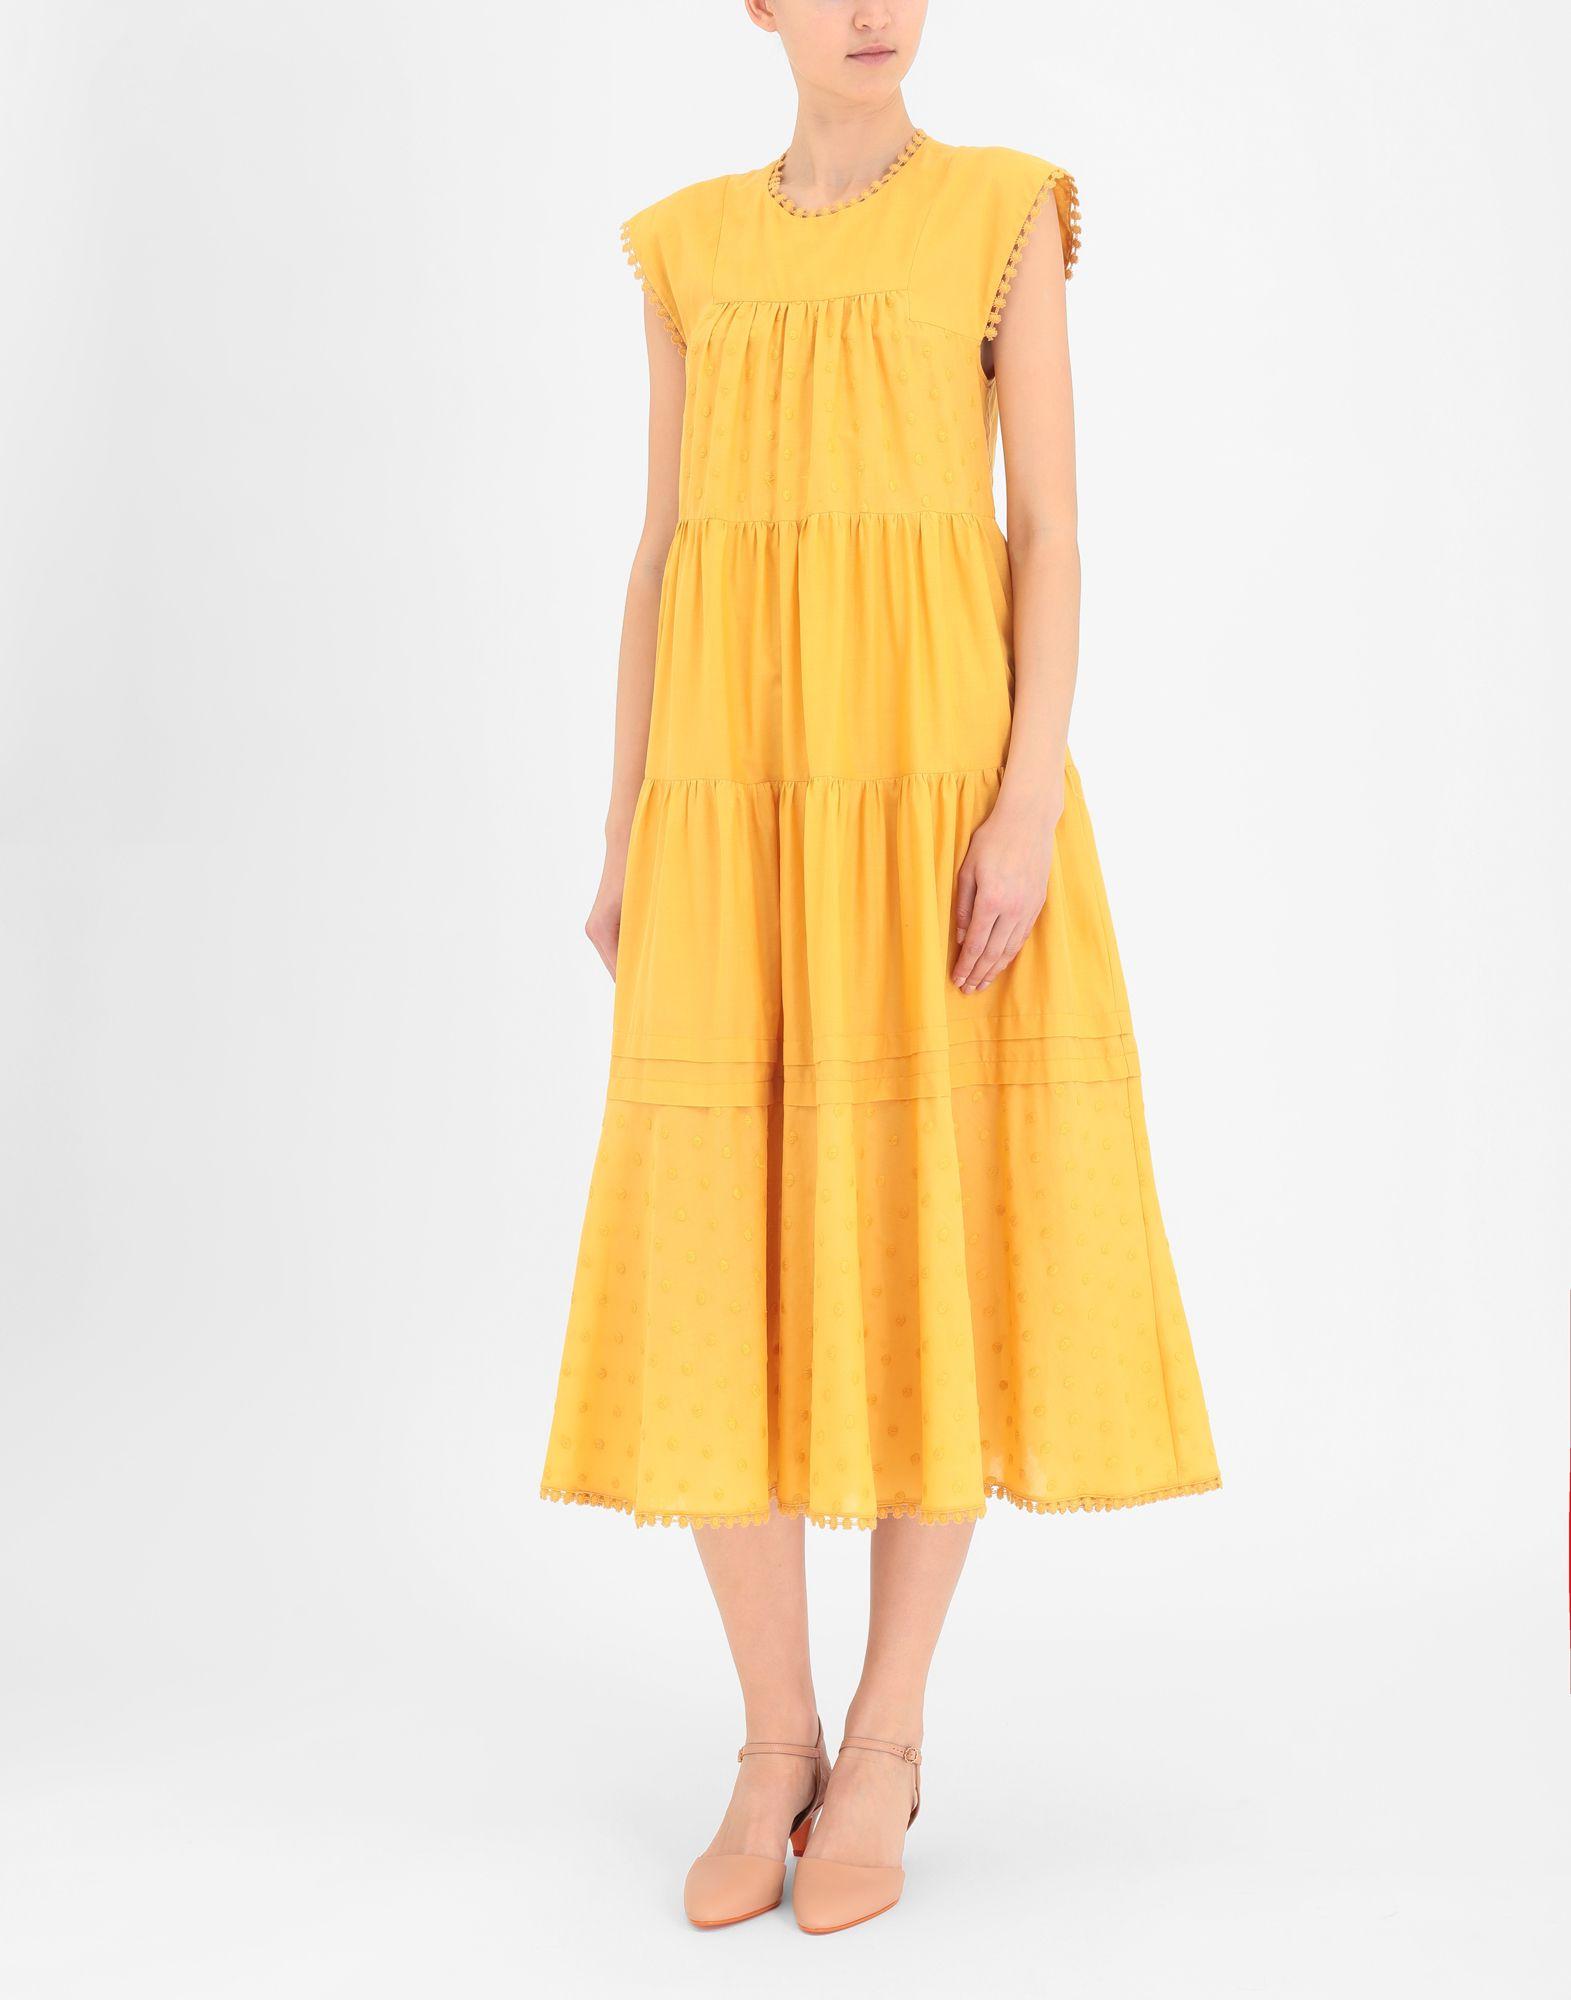 see by chloe yellow dress